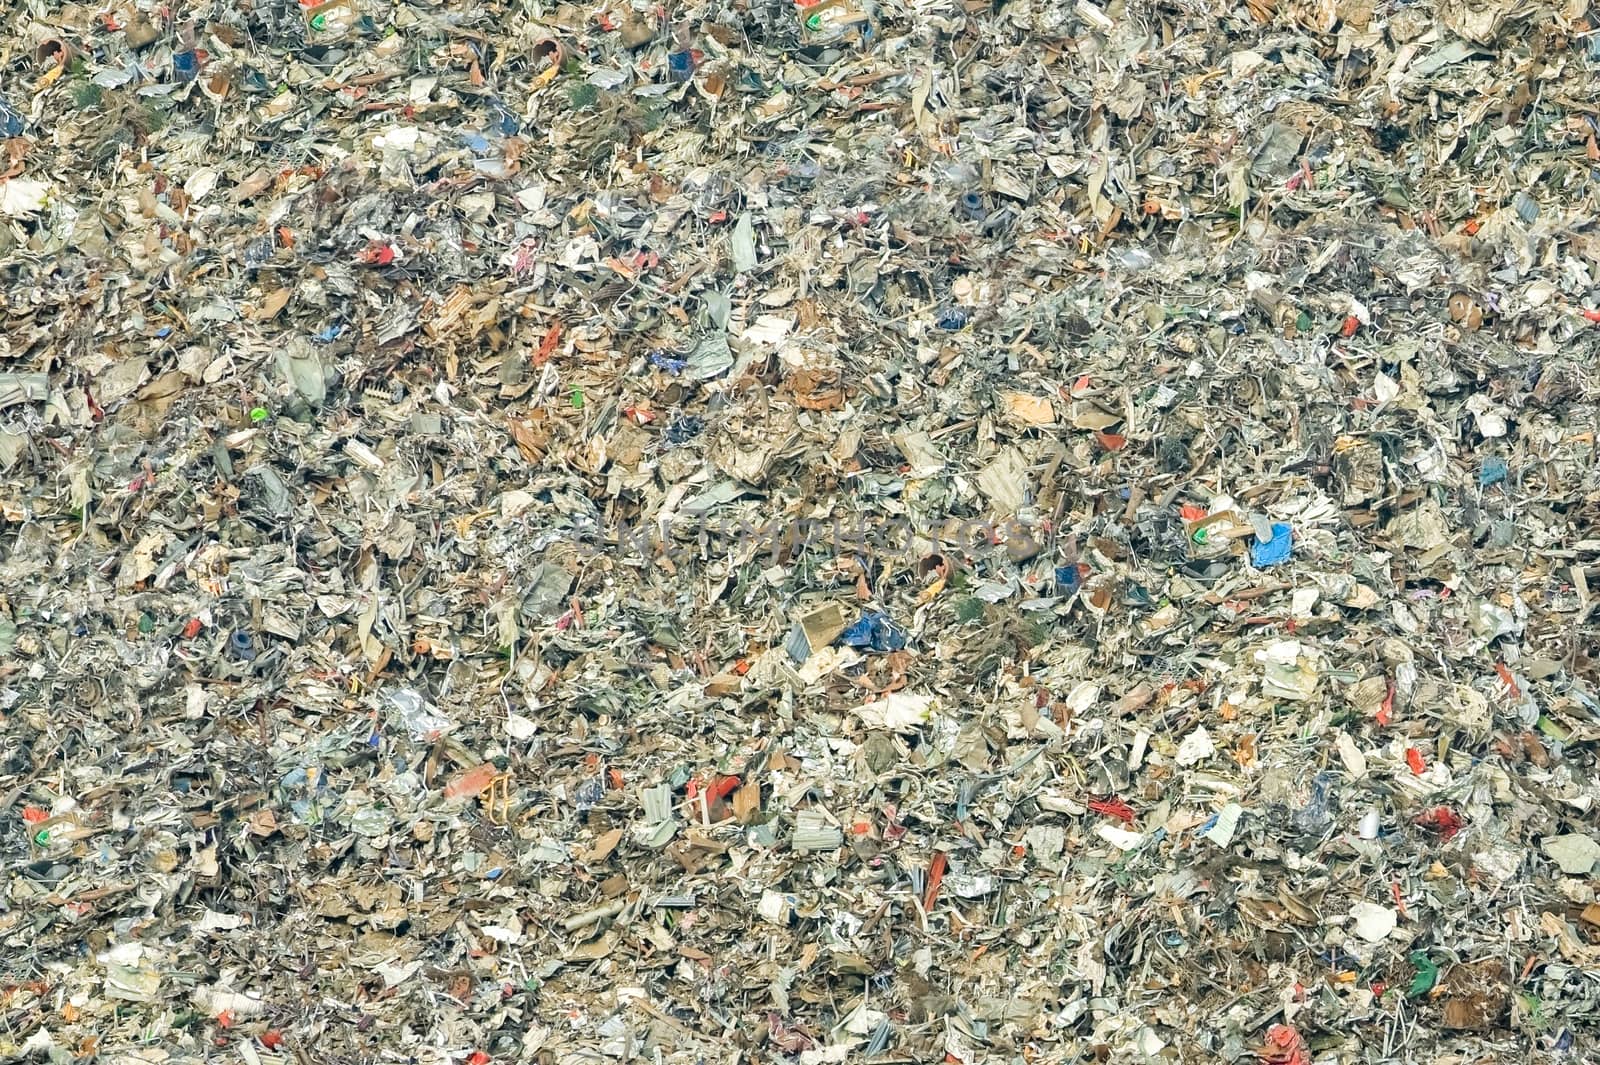 massive pile of decomposing landfill garbage - no visible trademarks